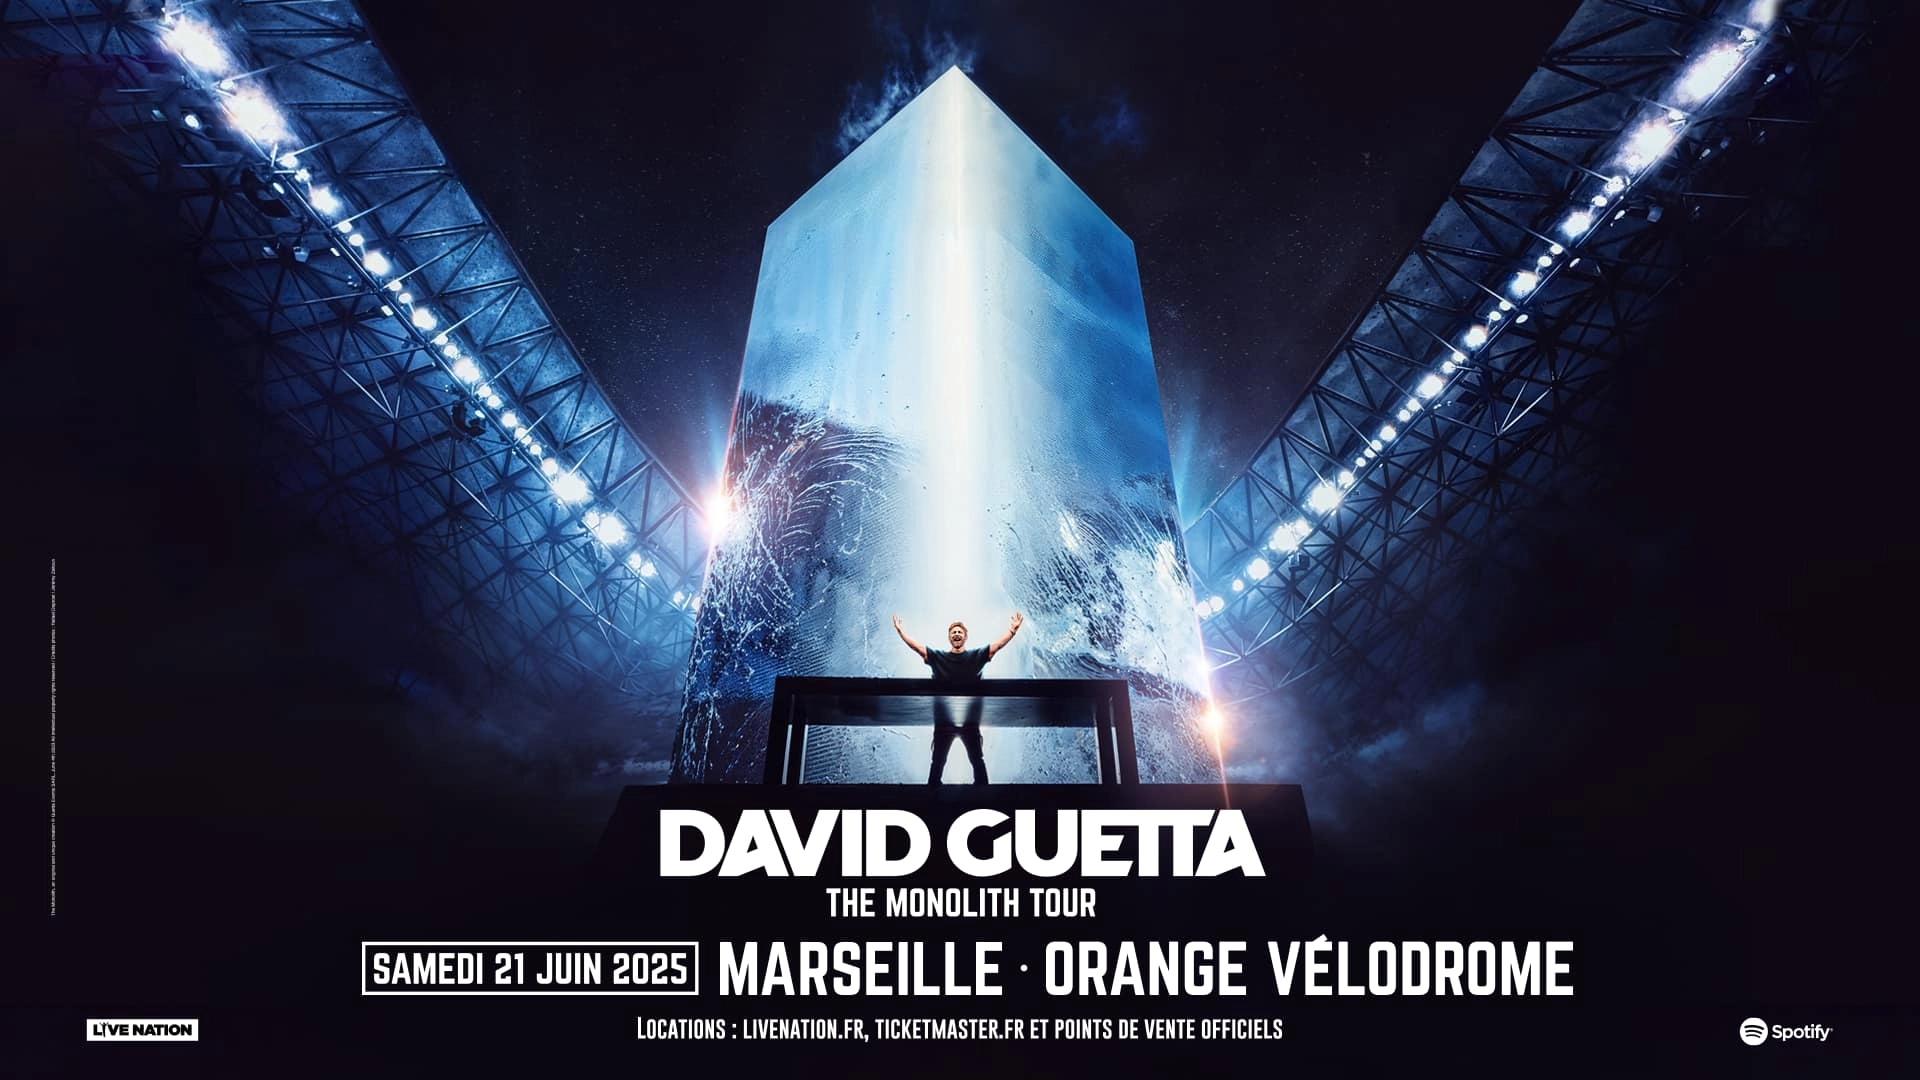 Concert David Guetta à Marseille (Orange Velodrome) du 21 juin 2025